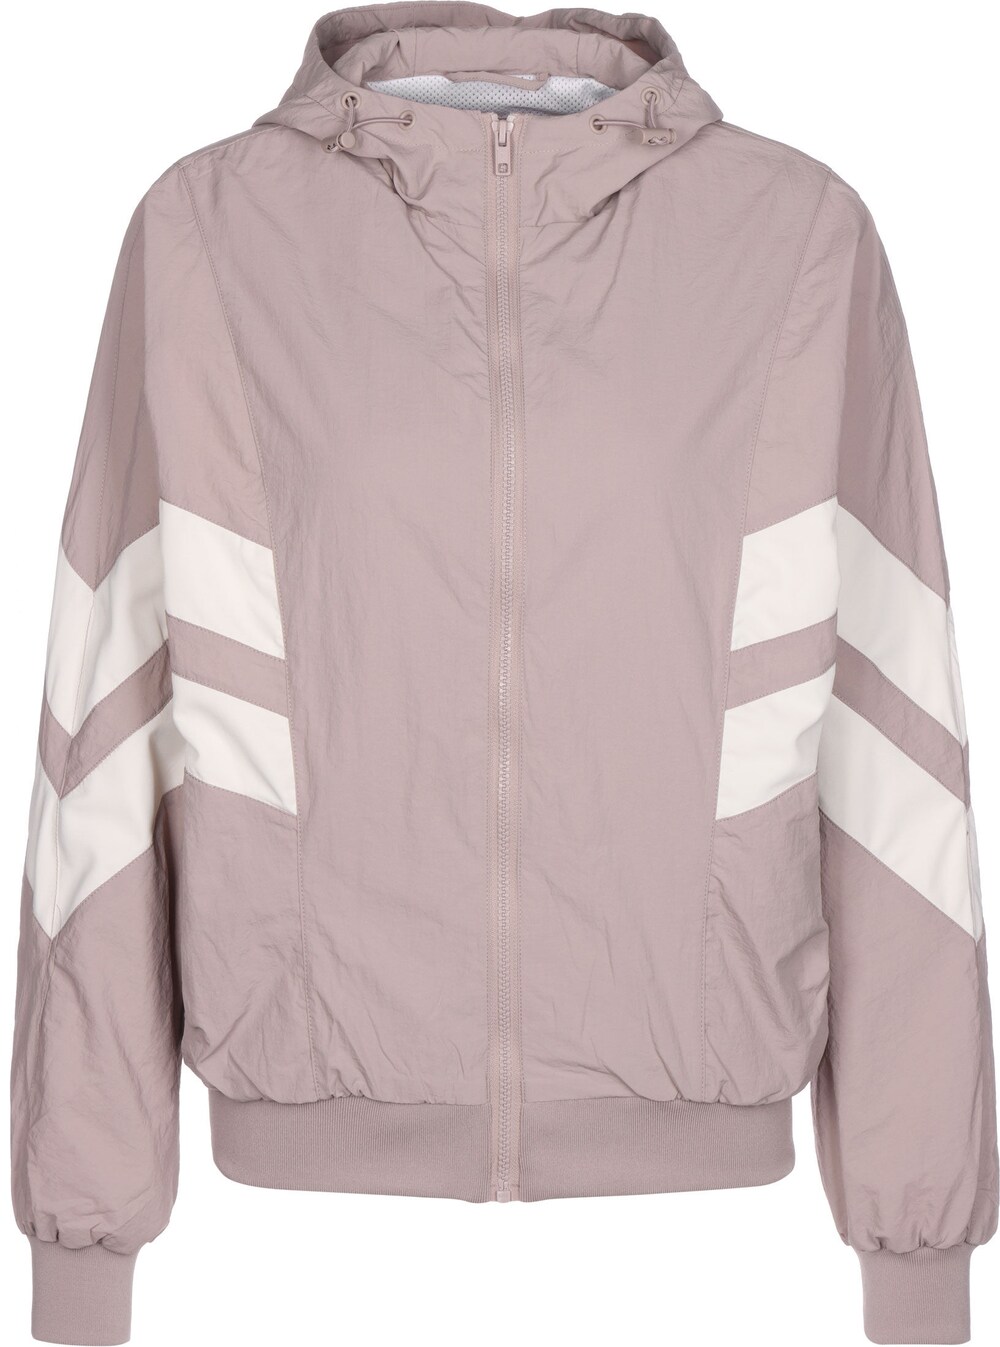 Межсезонная куртка Urban Classics Crinkle Batwing, розовый куртка urban classics crinkle batwing зеленый